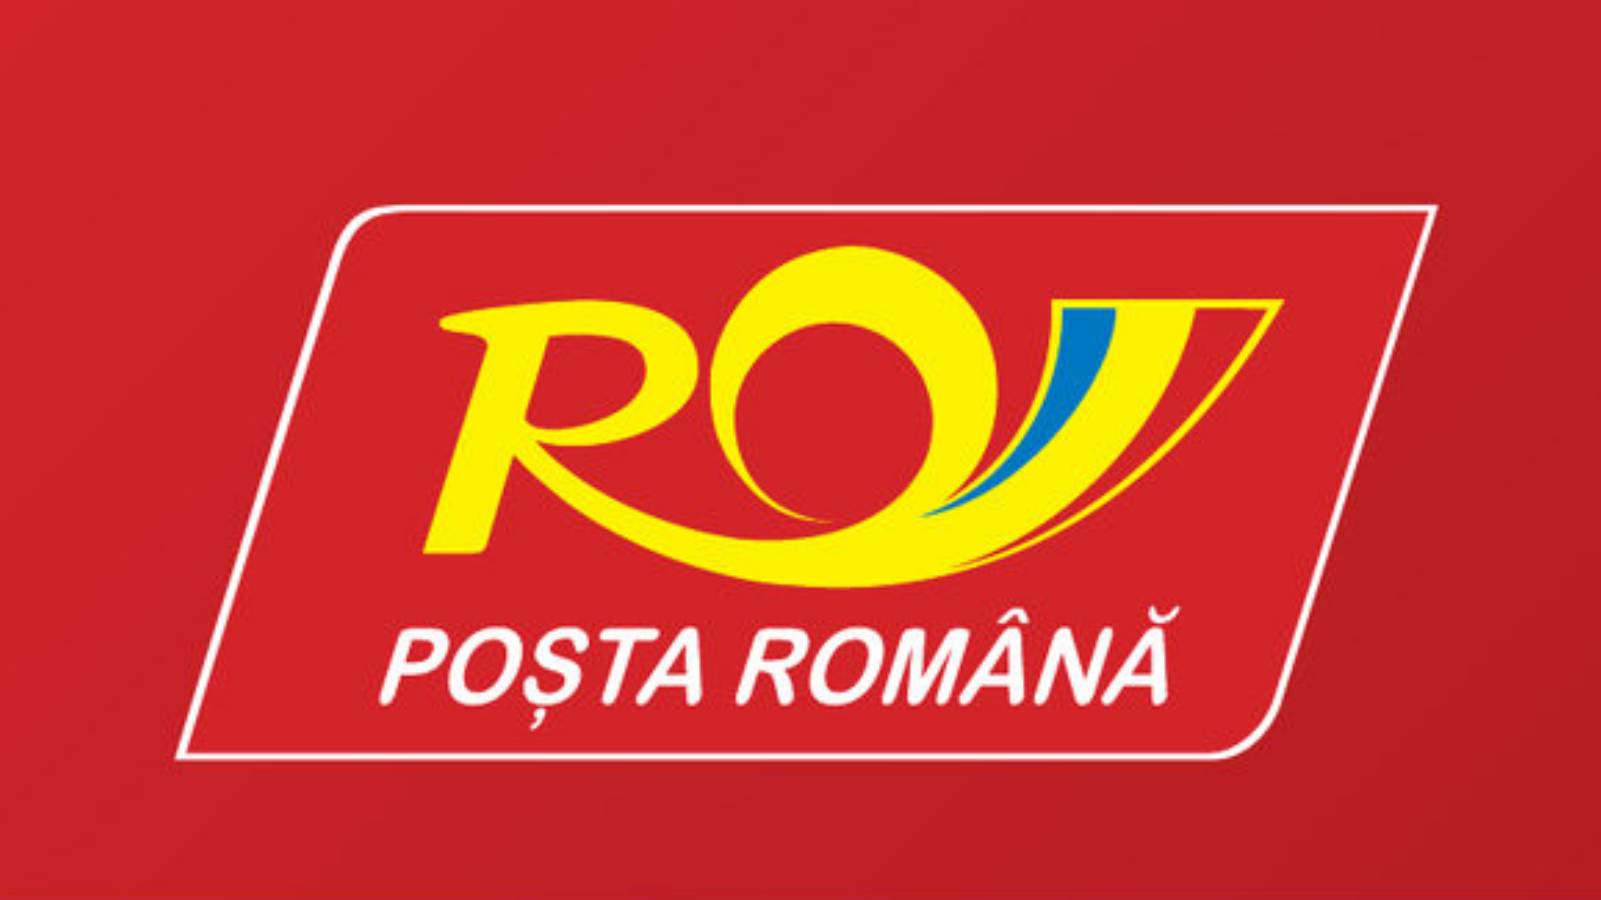 Oficina de correos del distrito de Posta Romana